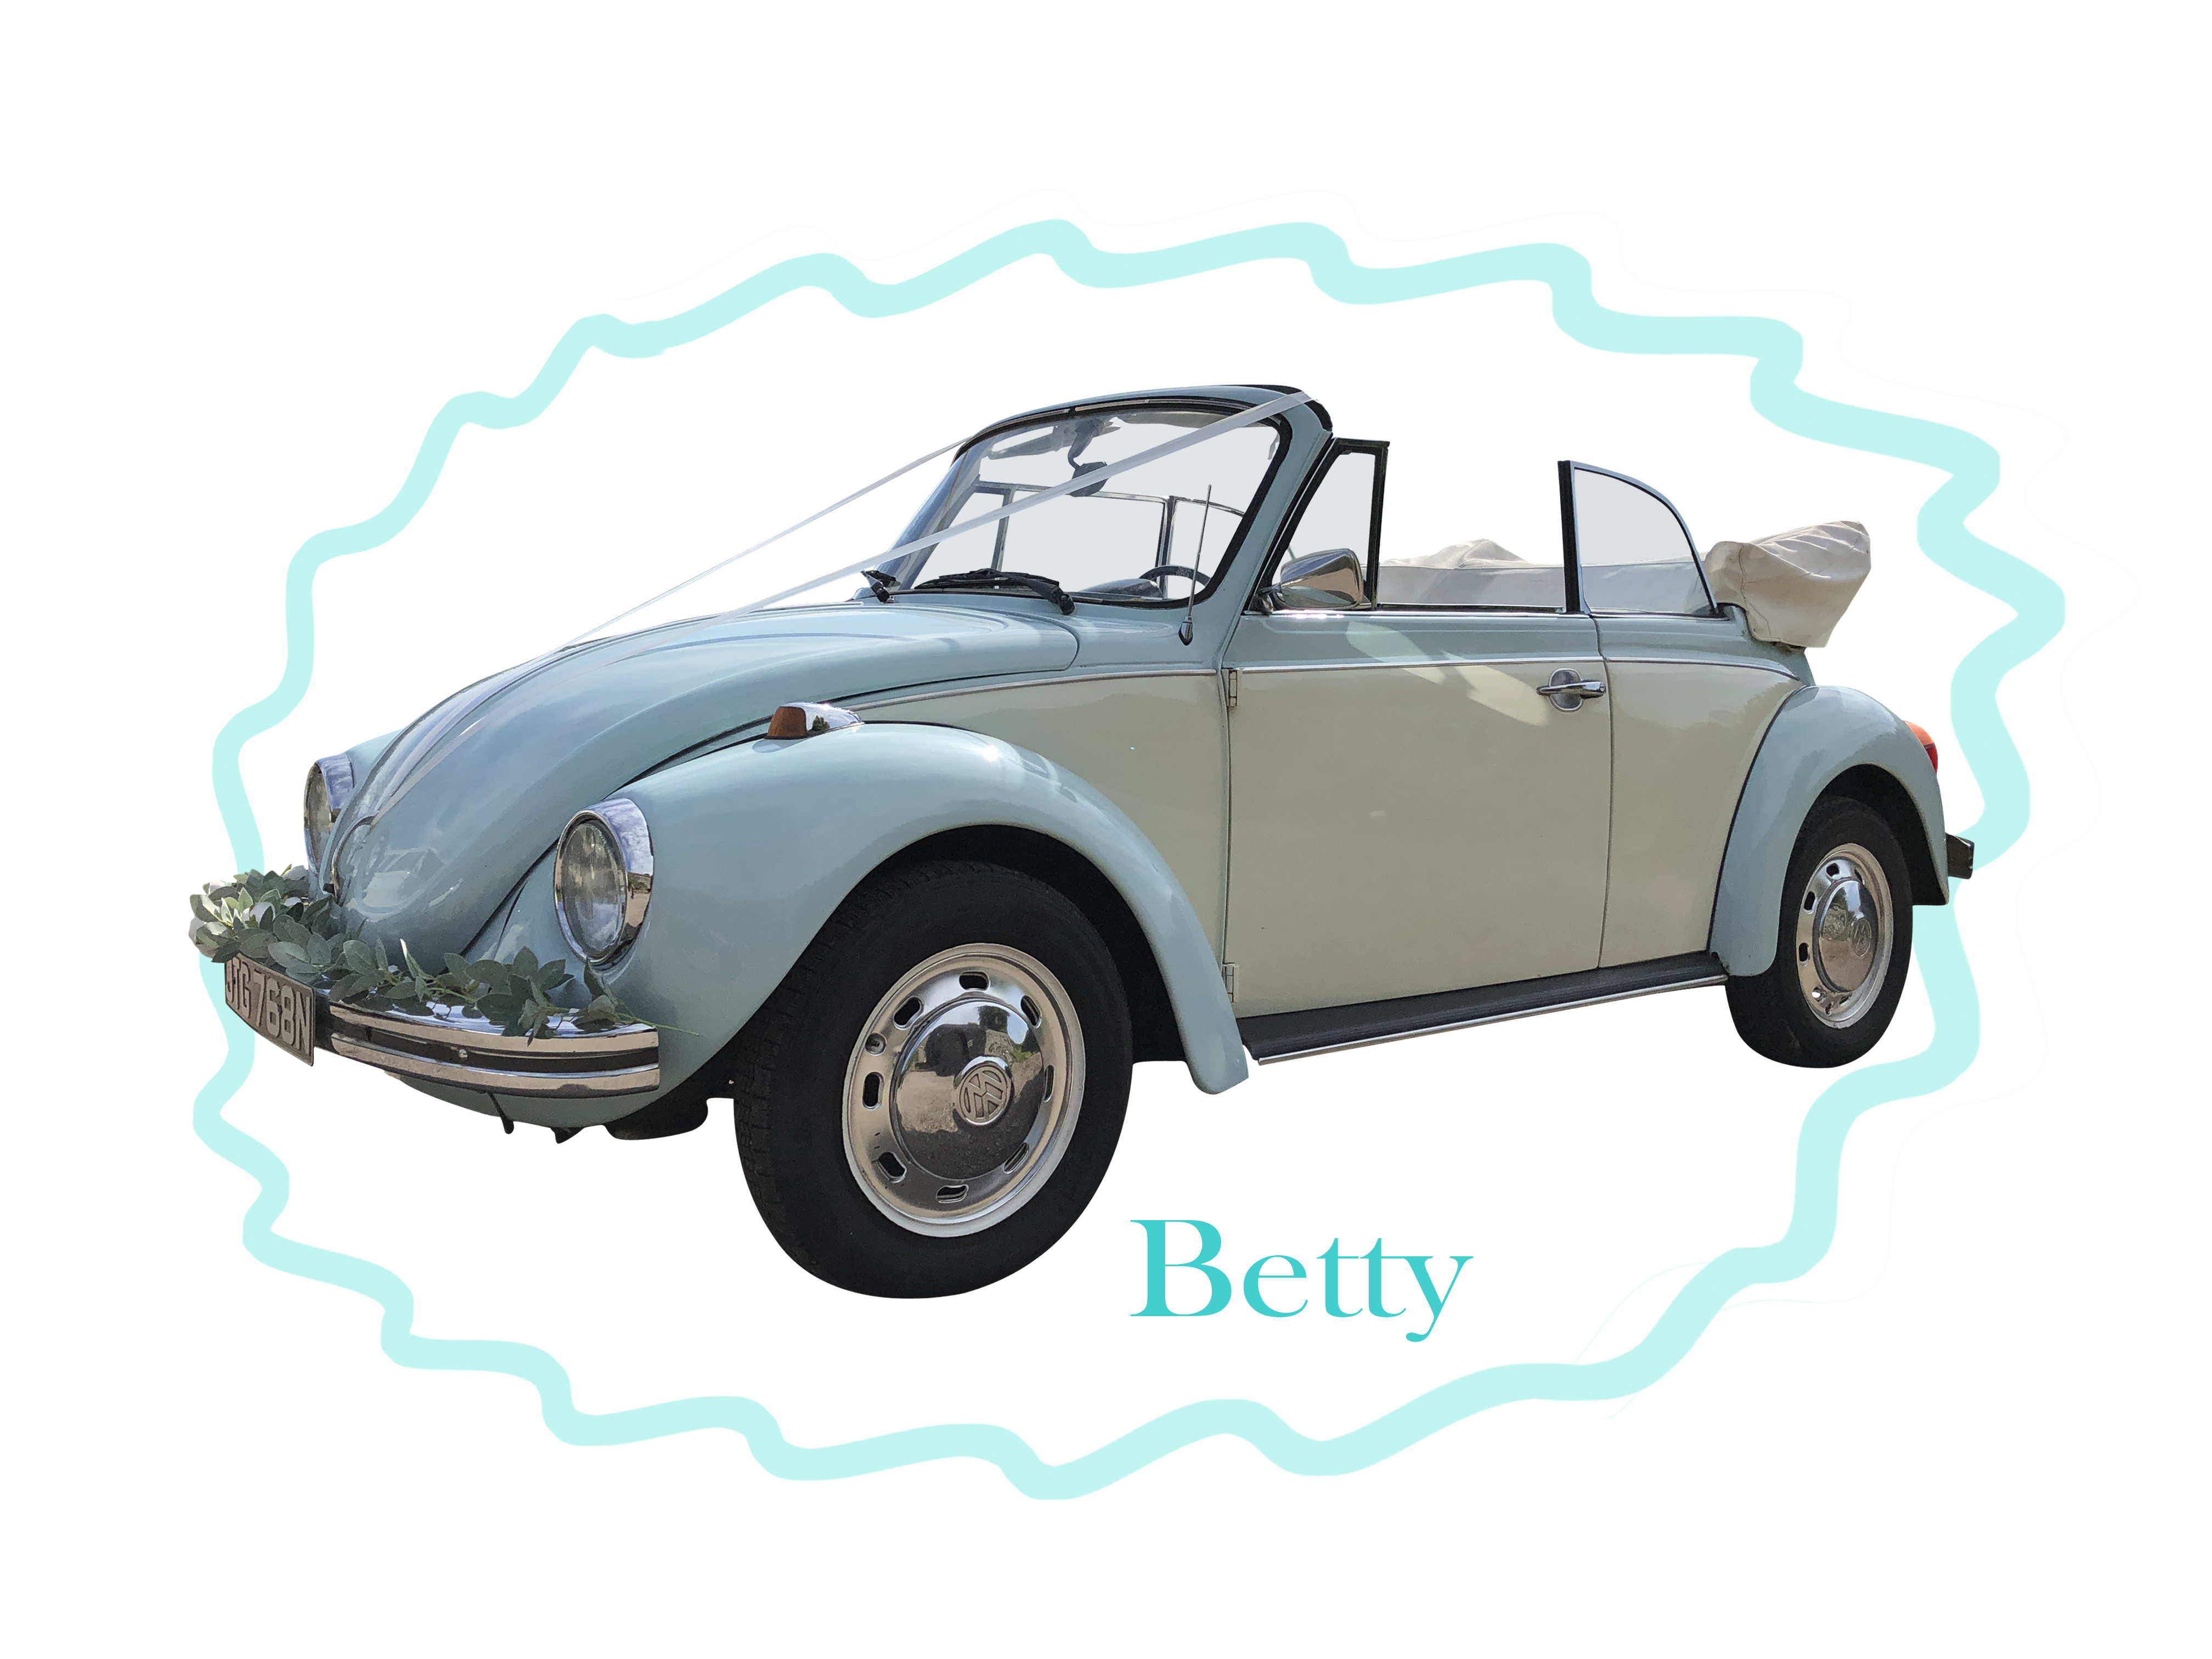 Betty VW Beetle wedding hire car